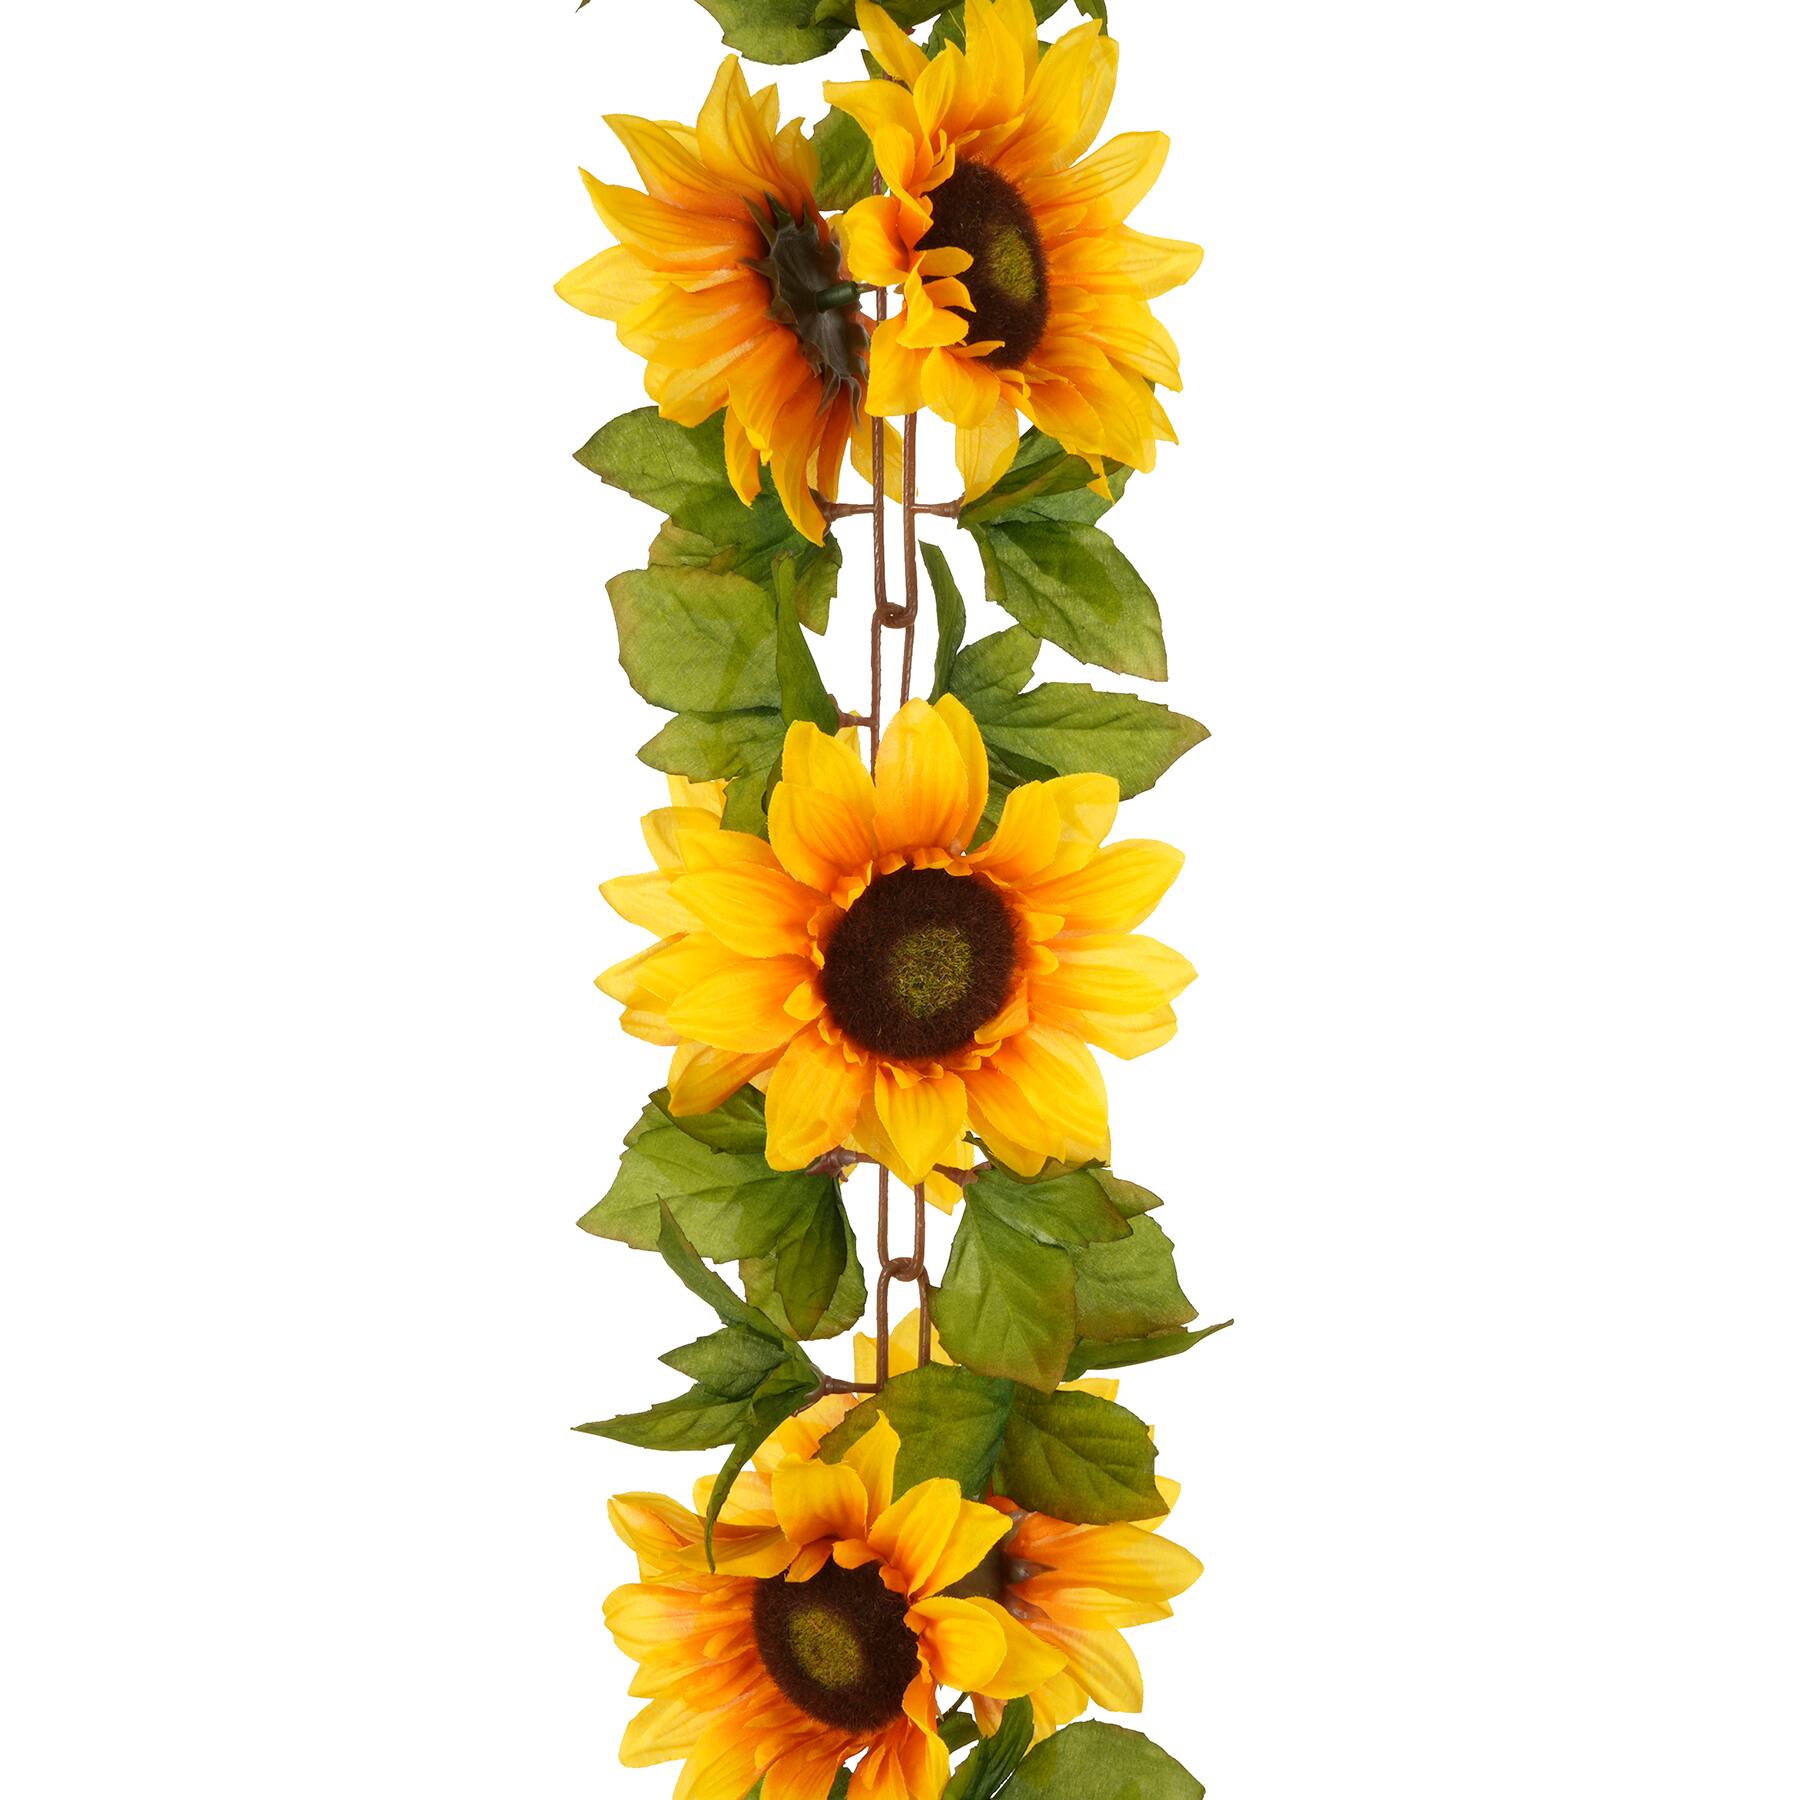 Happy Birthday Luxury Party Decorations, Sunflower Garlands